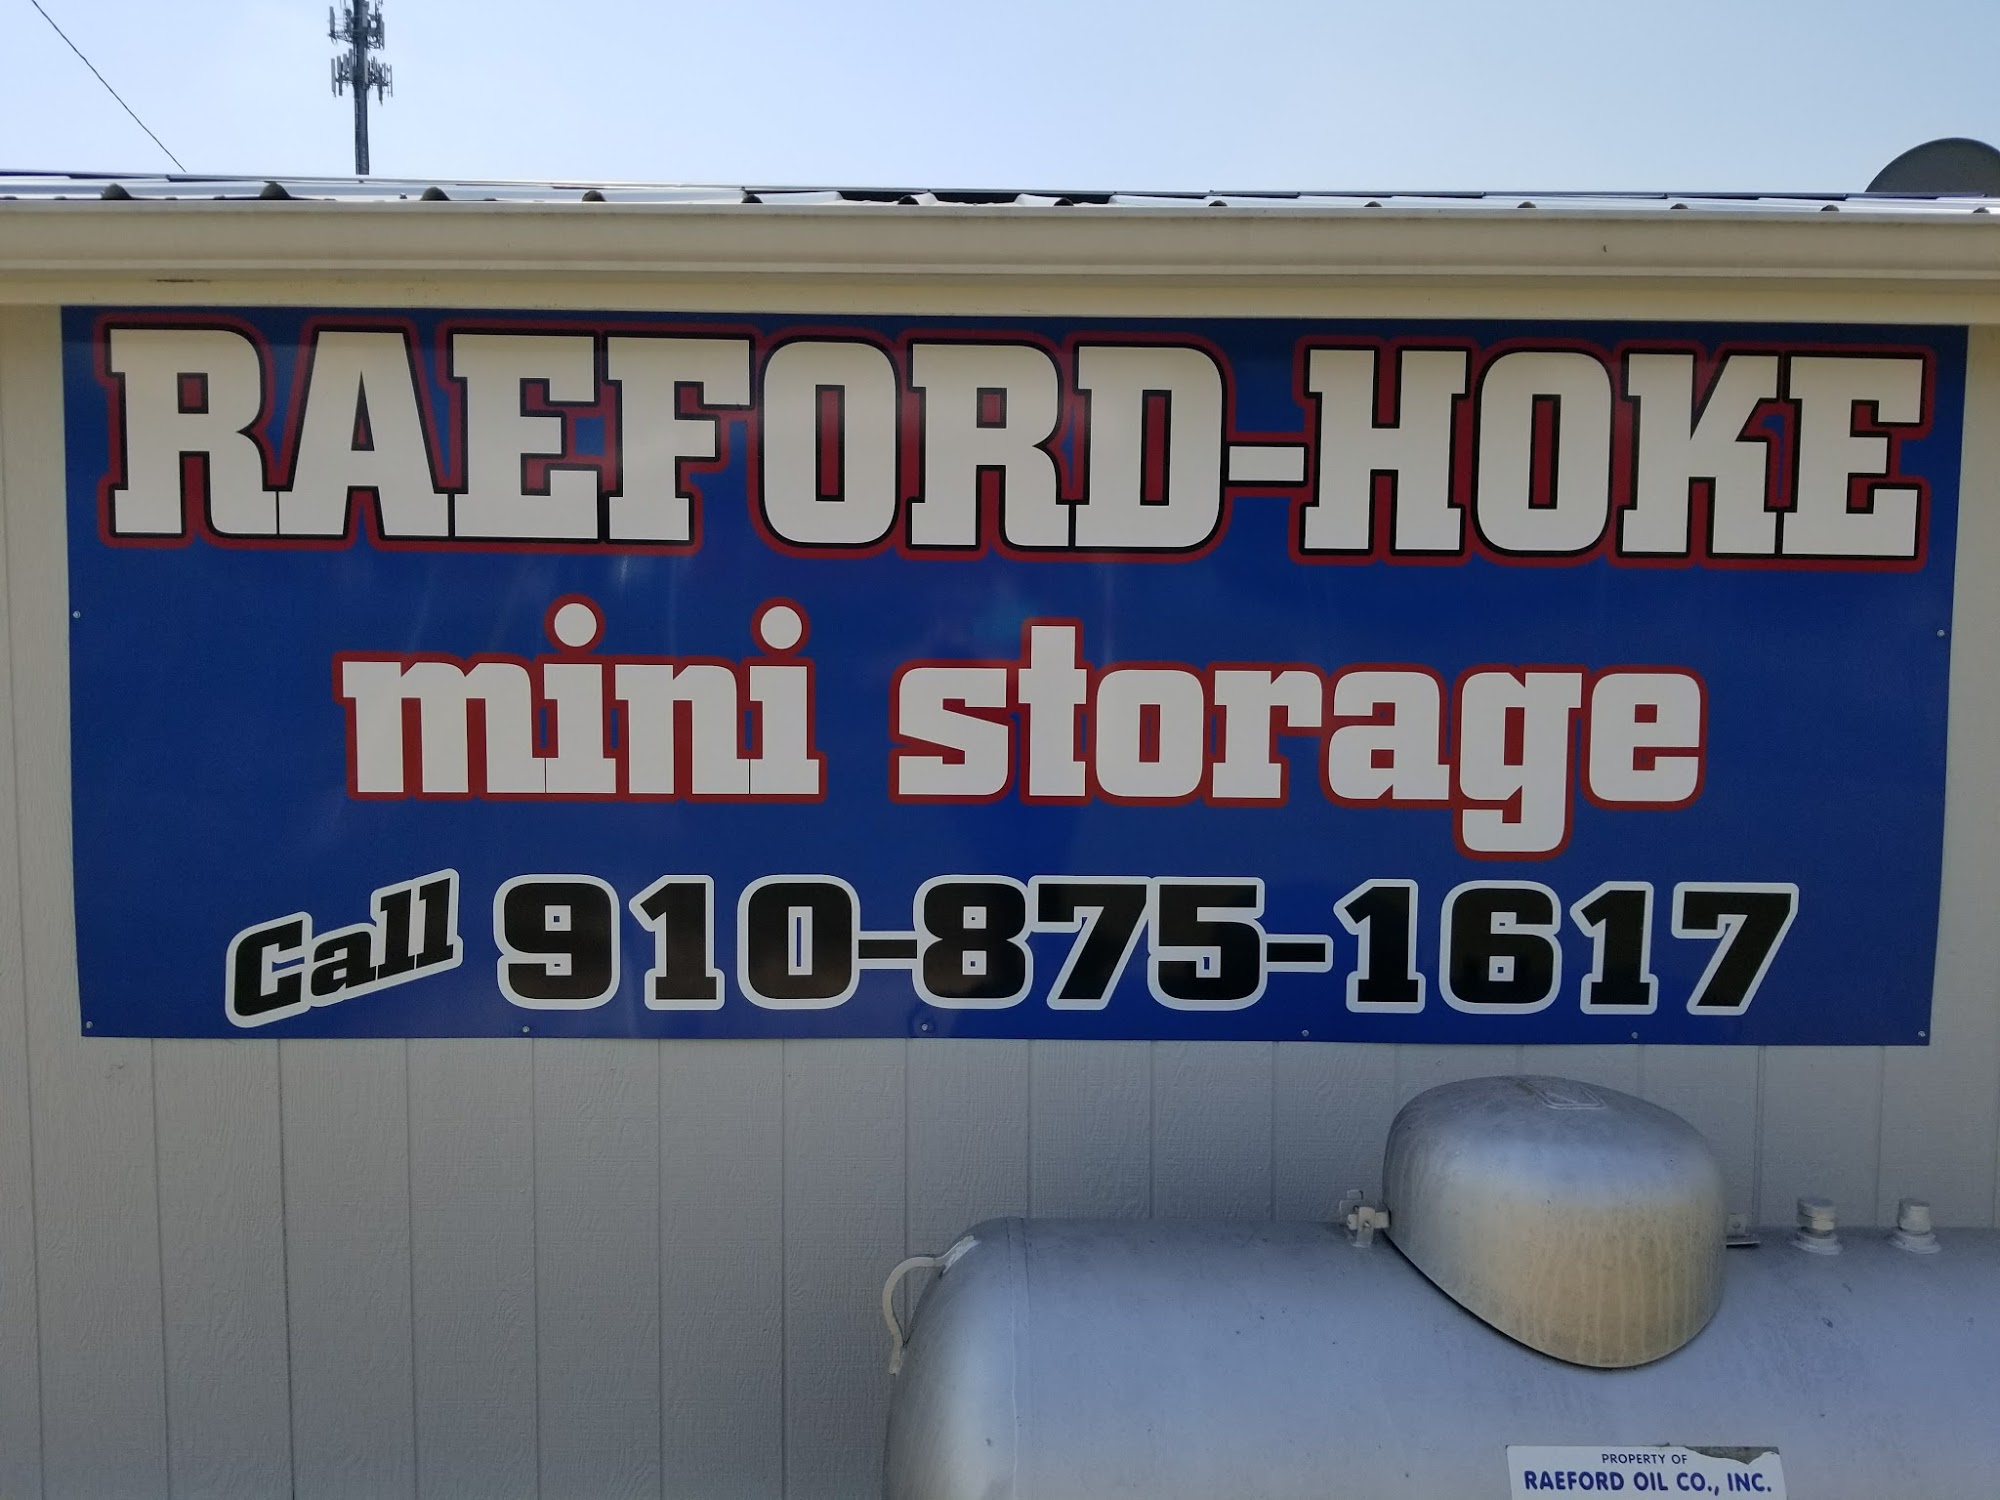 Raeford-Hoke Mini Storage